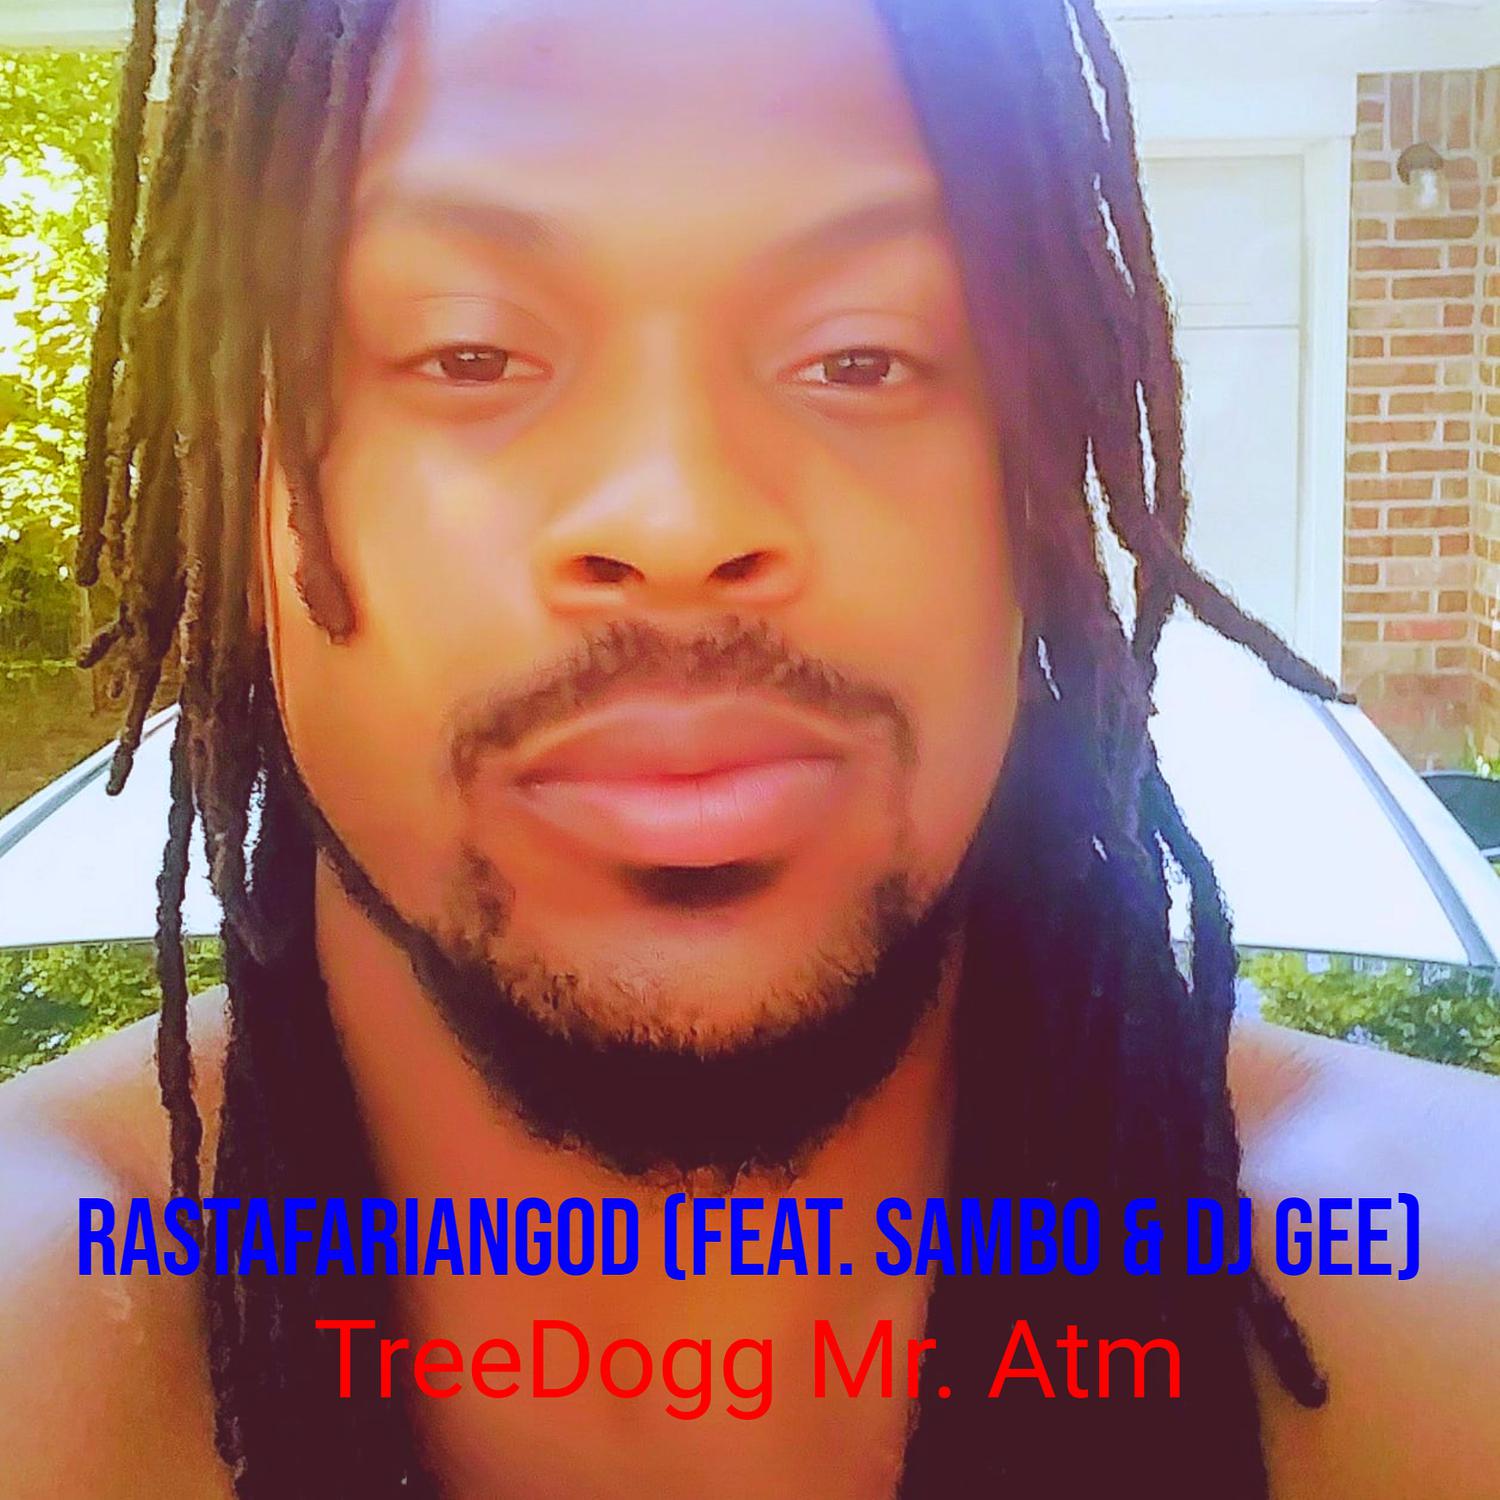 TreeDogg Mr. ATM - RastafarianGod